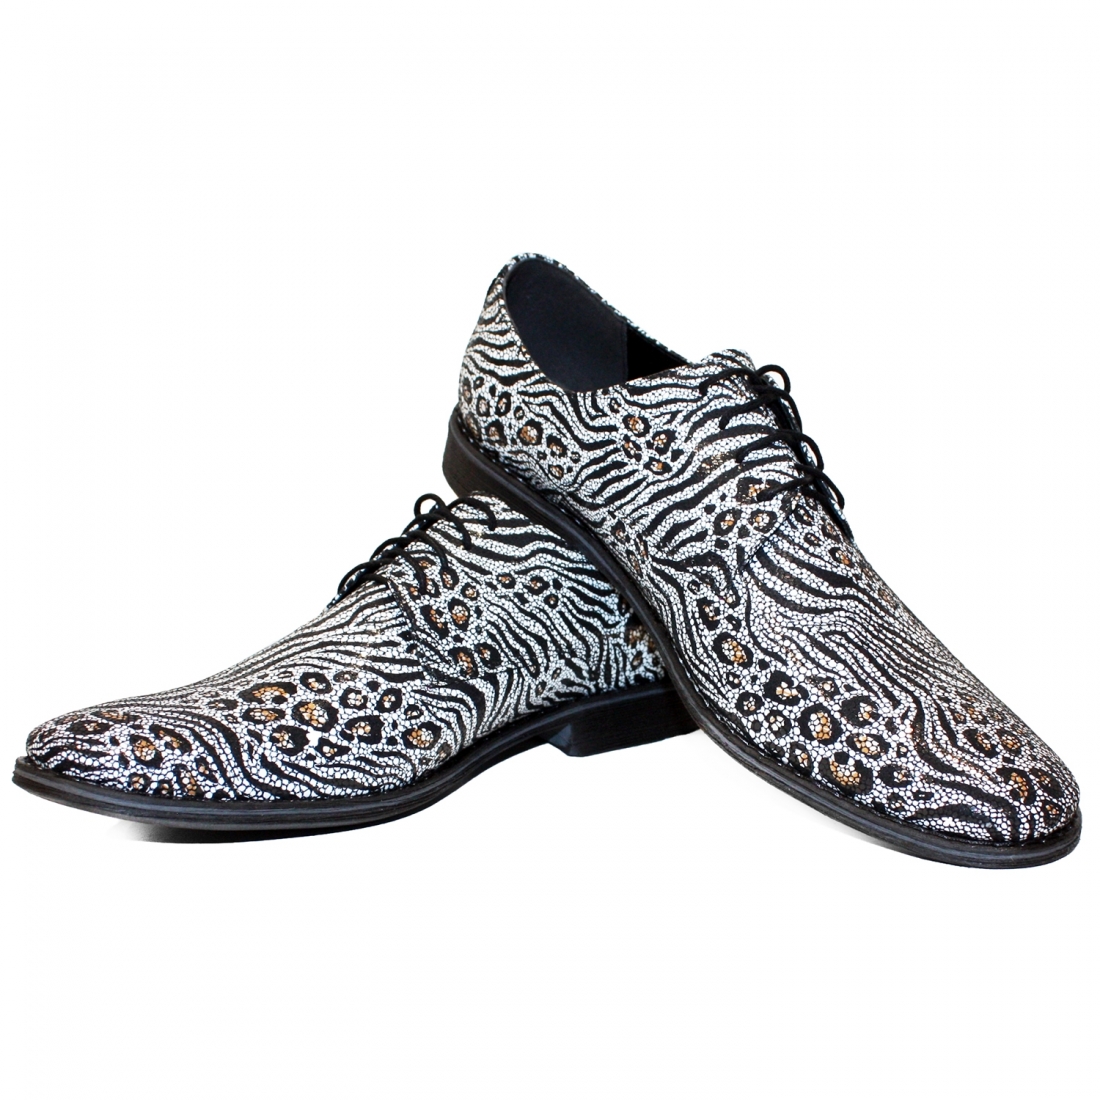 Modello Zeberro - クラシックシューズ - Handmade Colorful Italian Leather Shoes